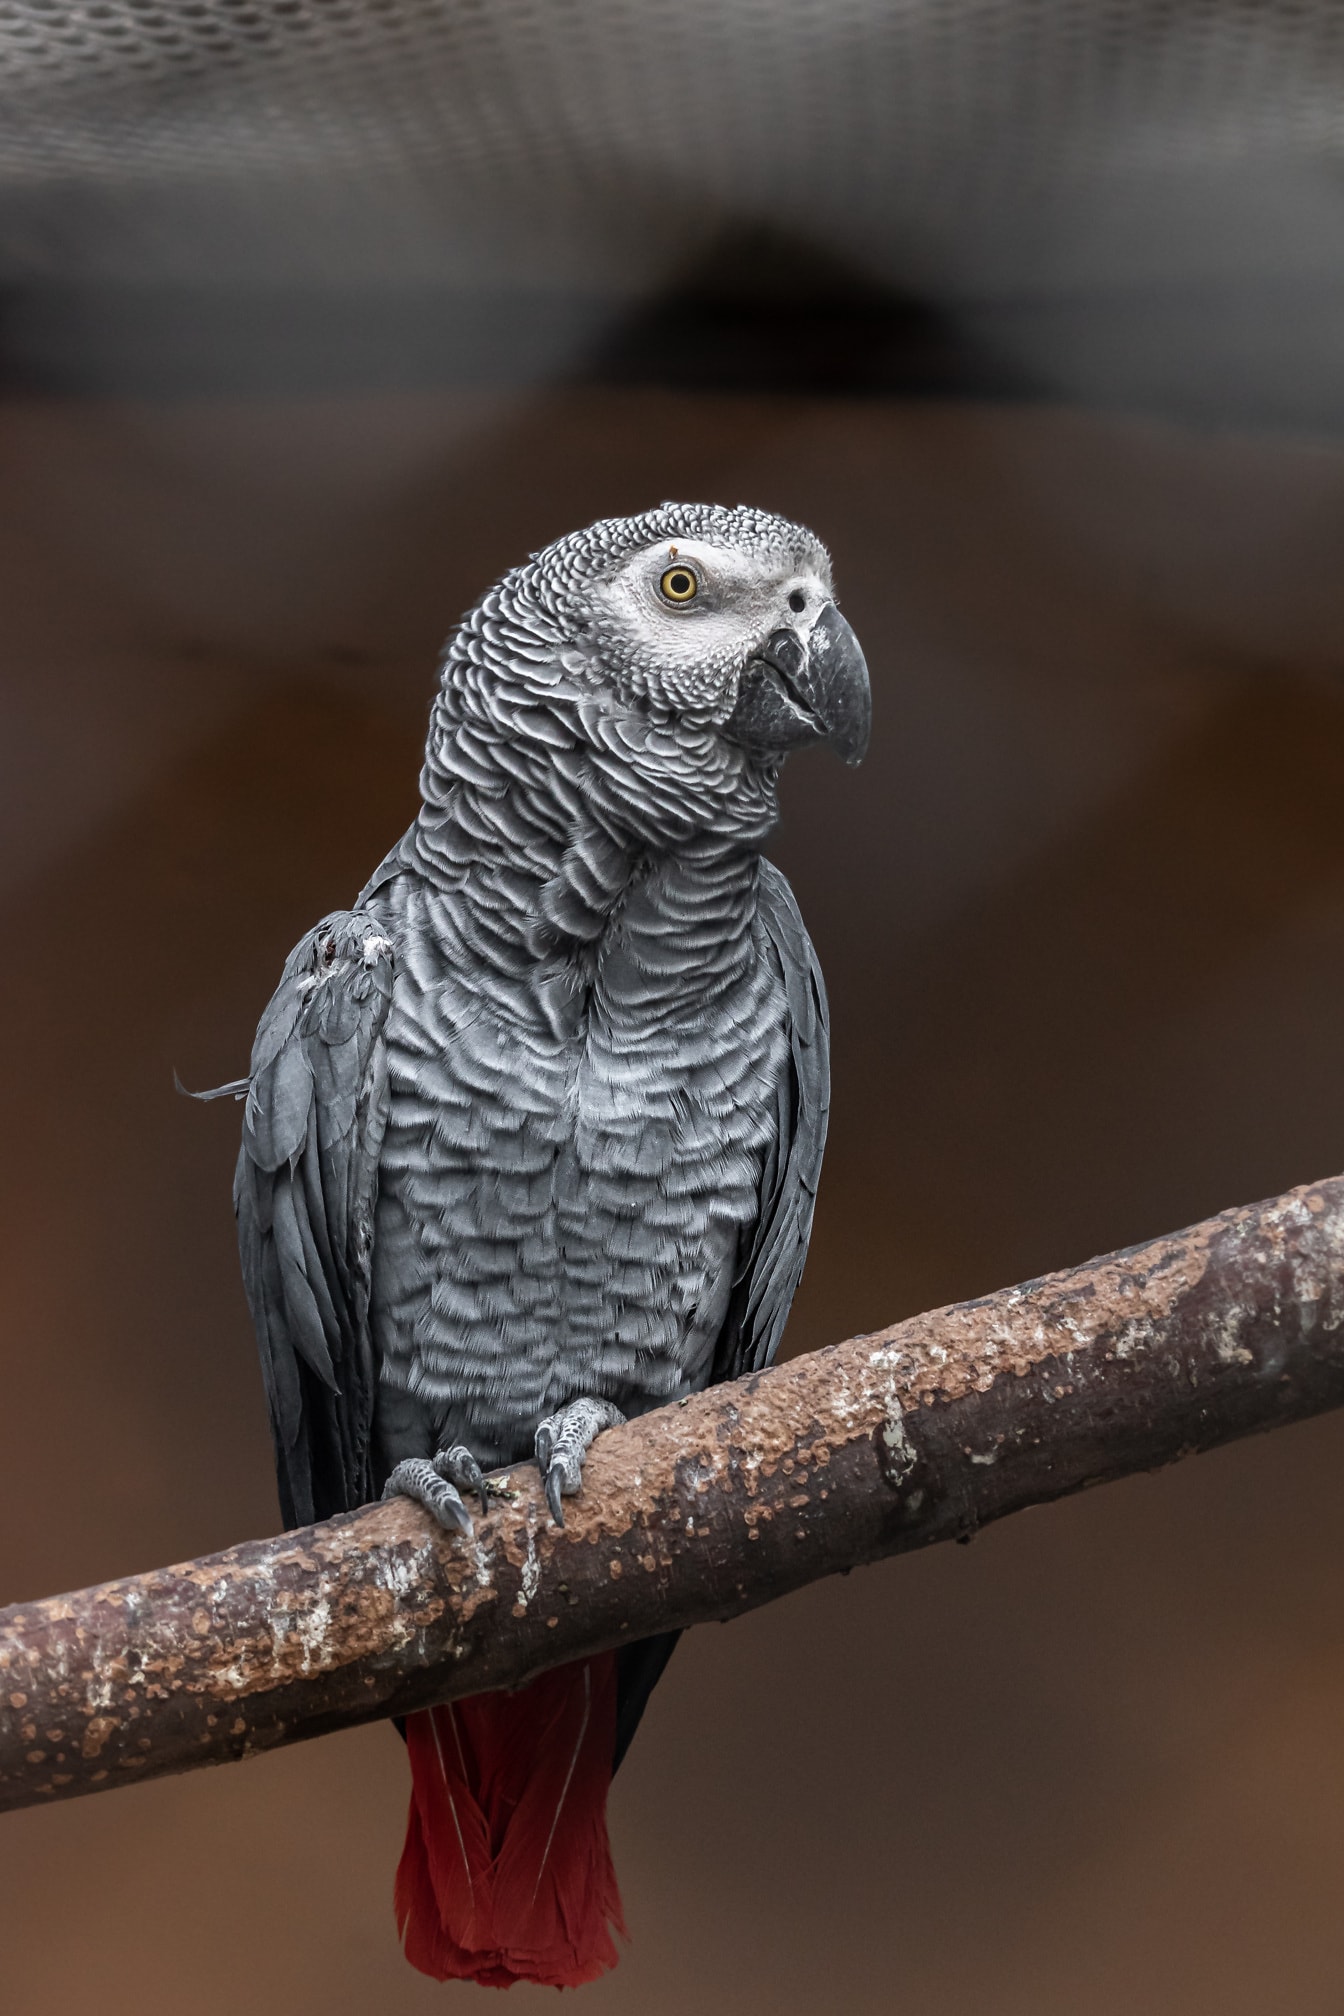 Kongo szara afrykańska papuga (Psittacus erithacus) ptak